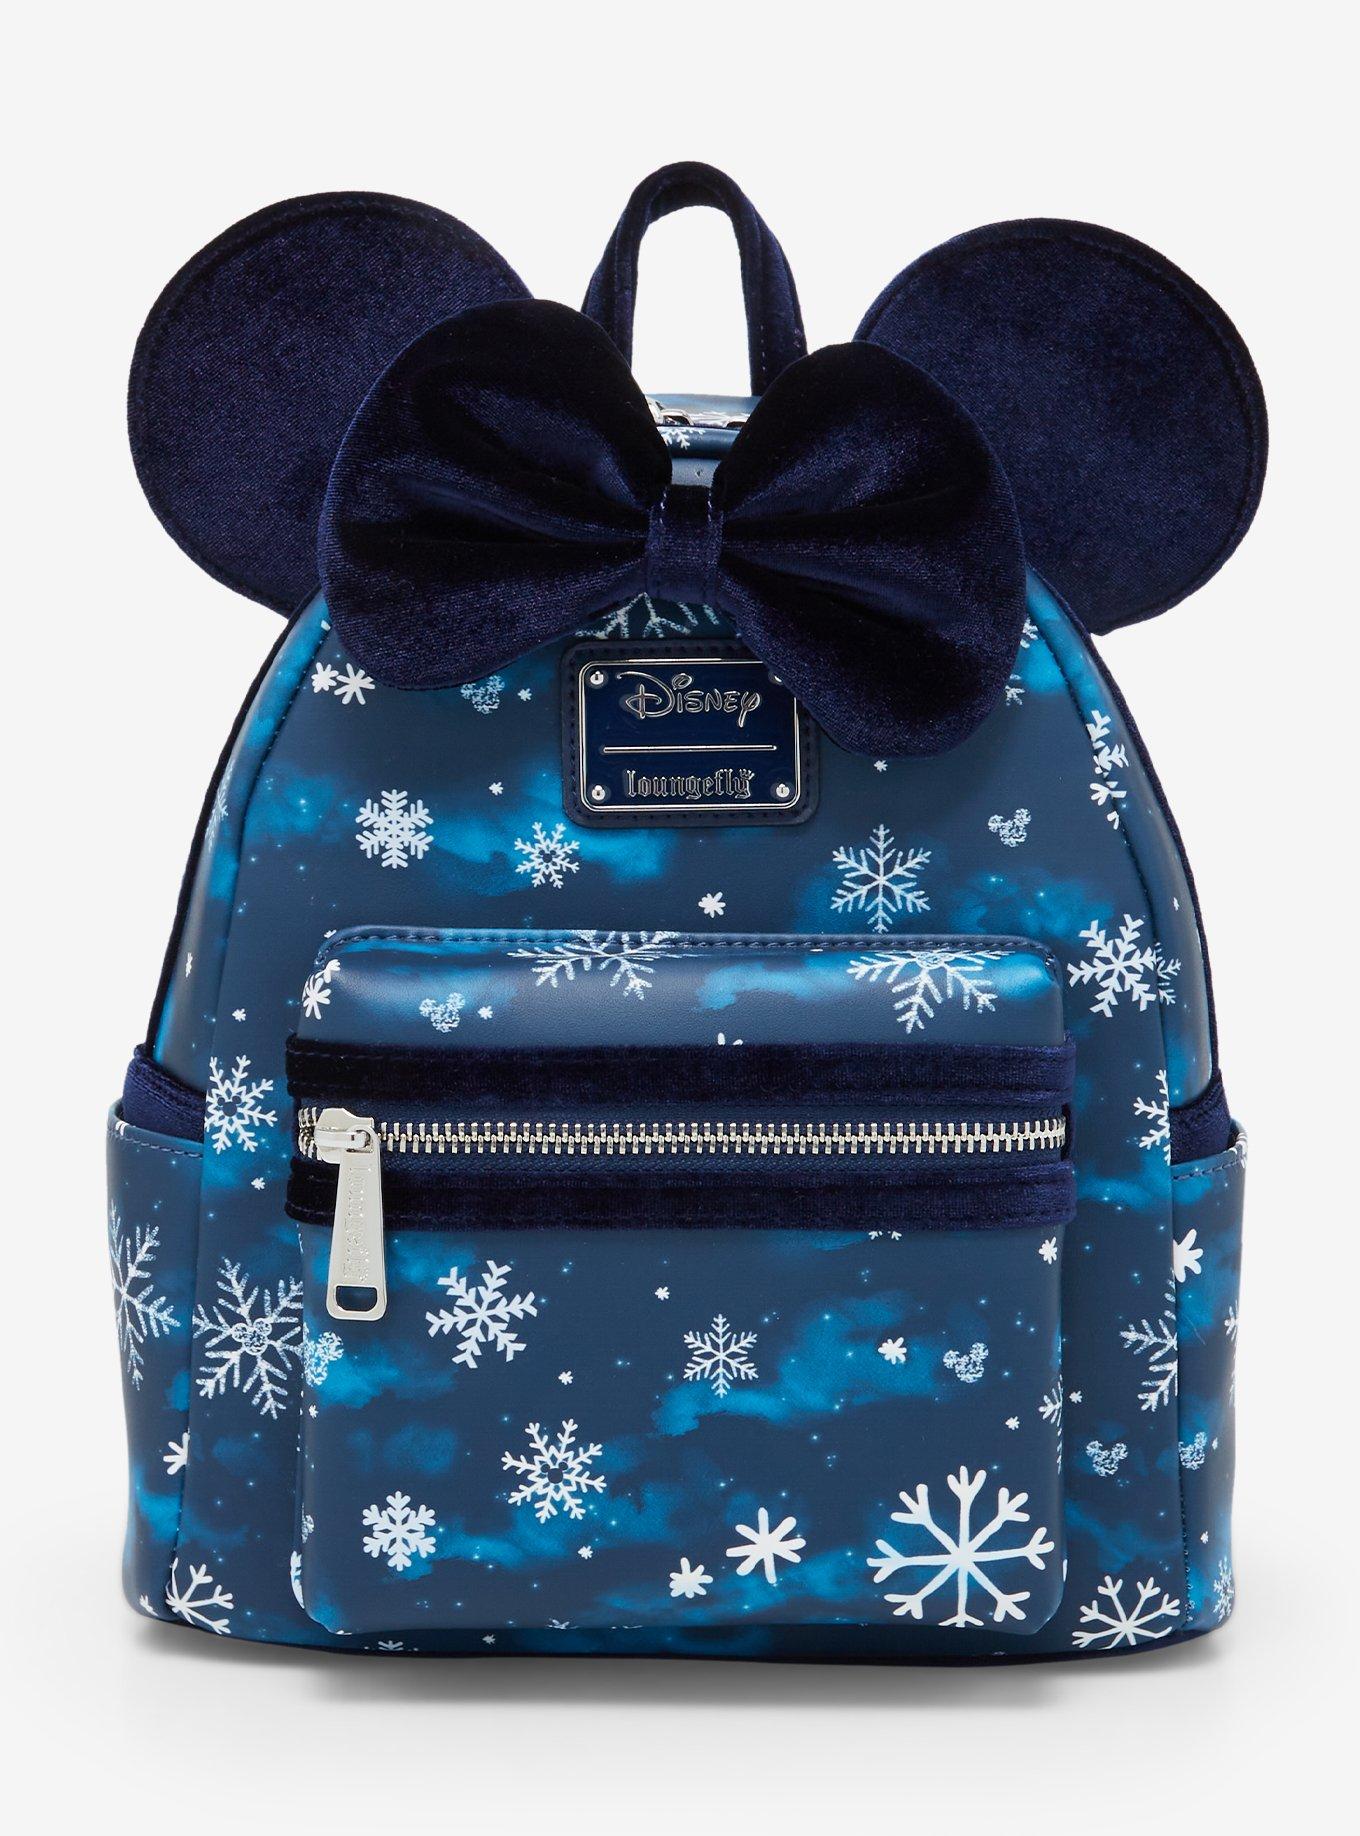 Minnie Mouse Disney Soft Lunch Box Bag